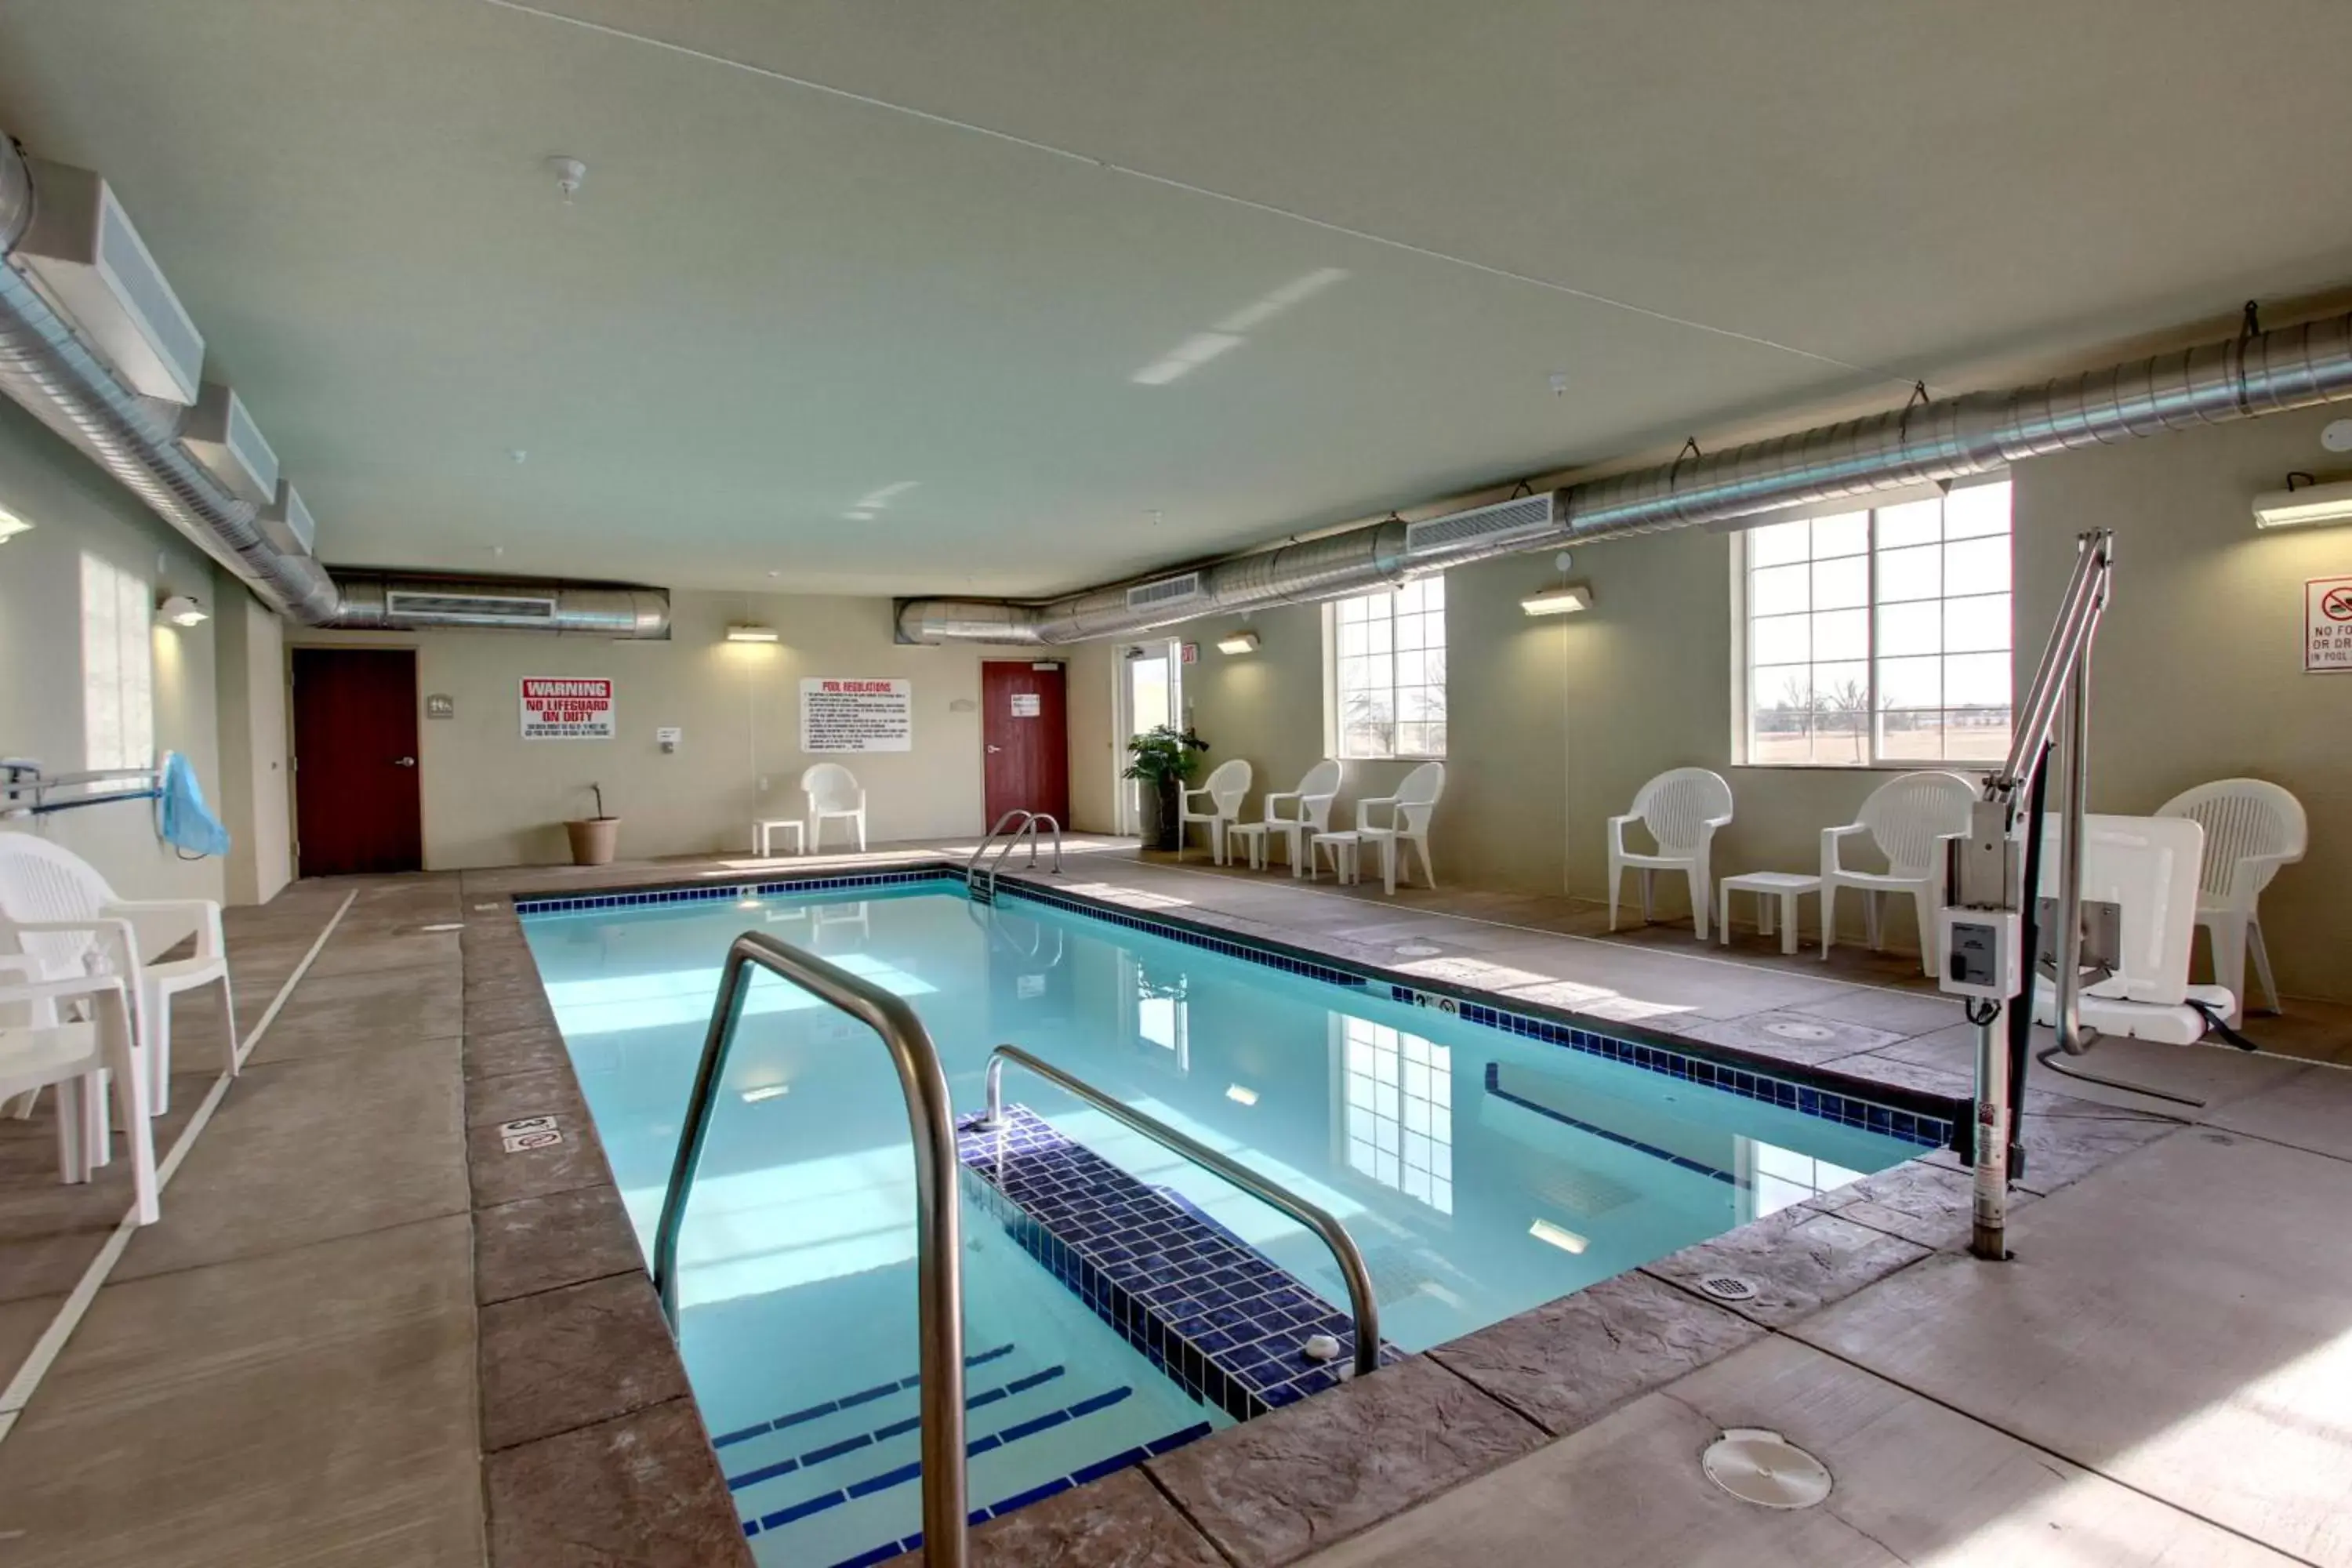 Swimming Pool in Cobblestone Hotel - Wayne